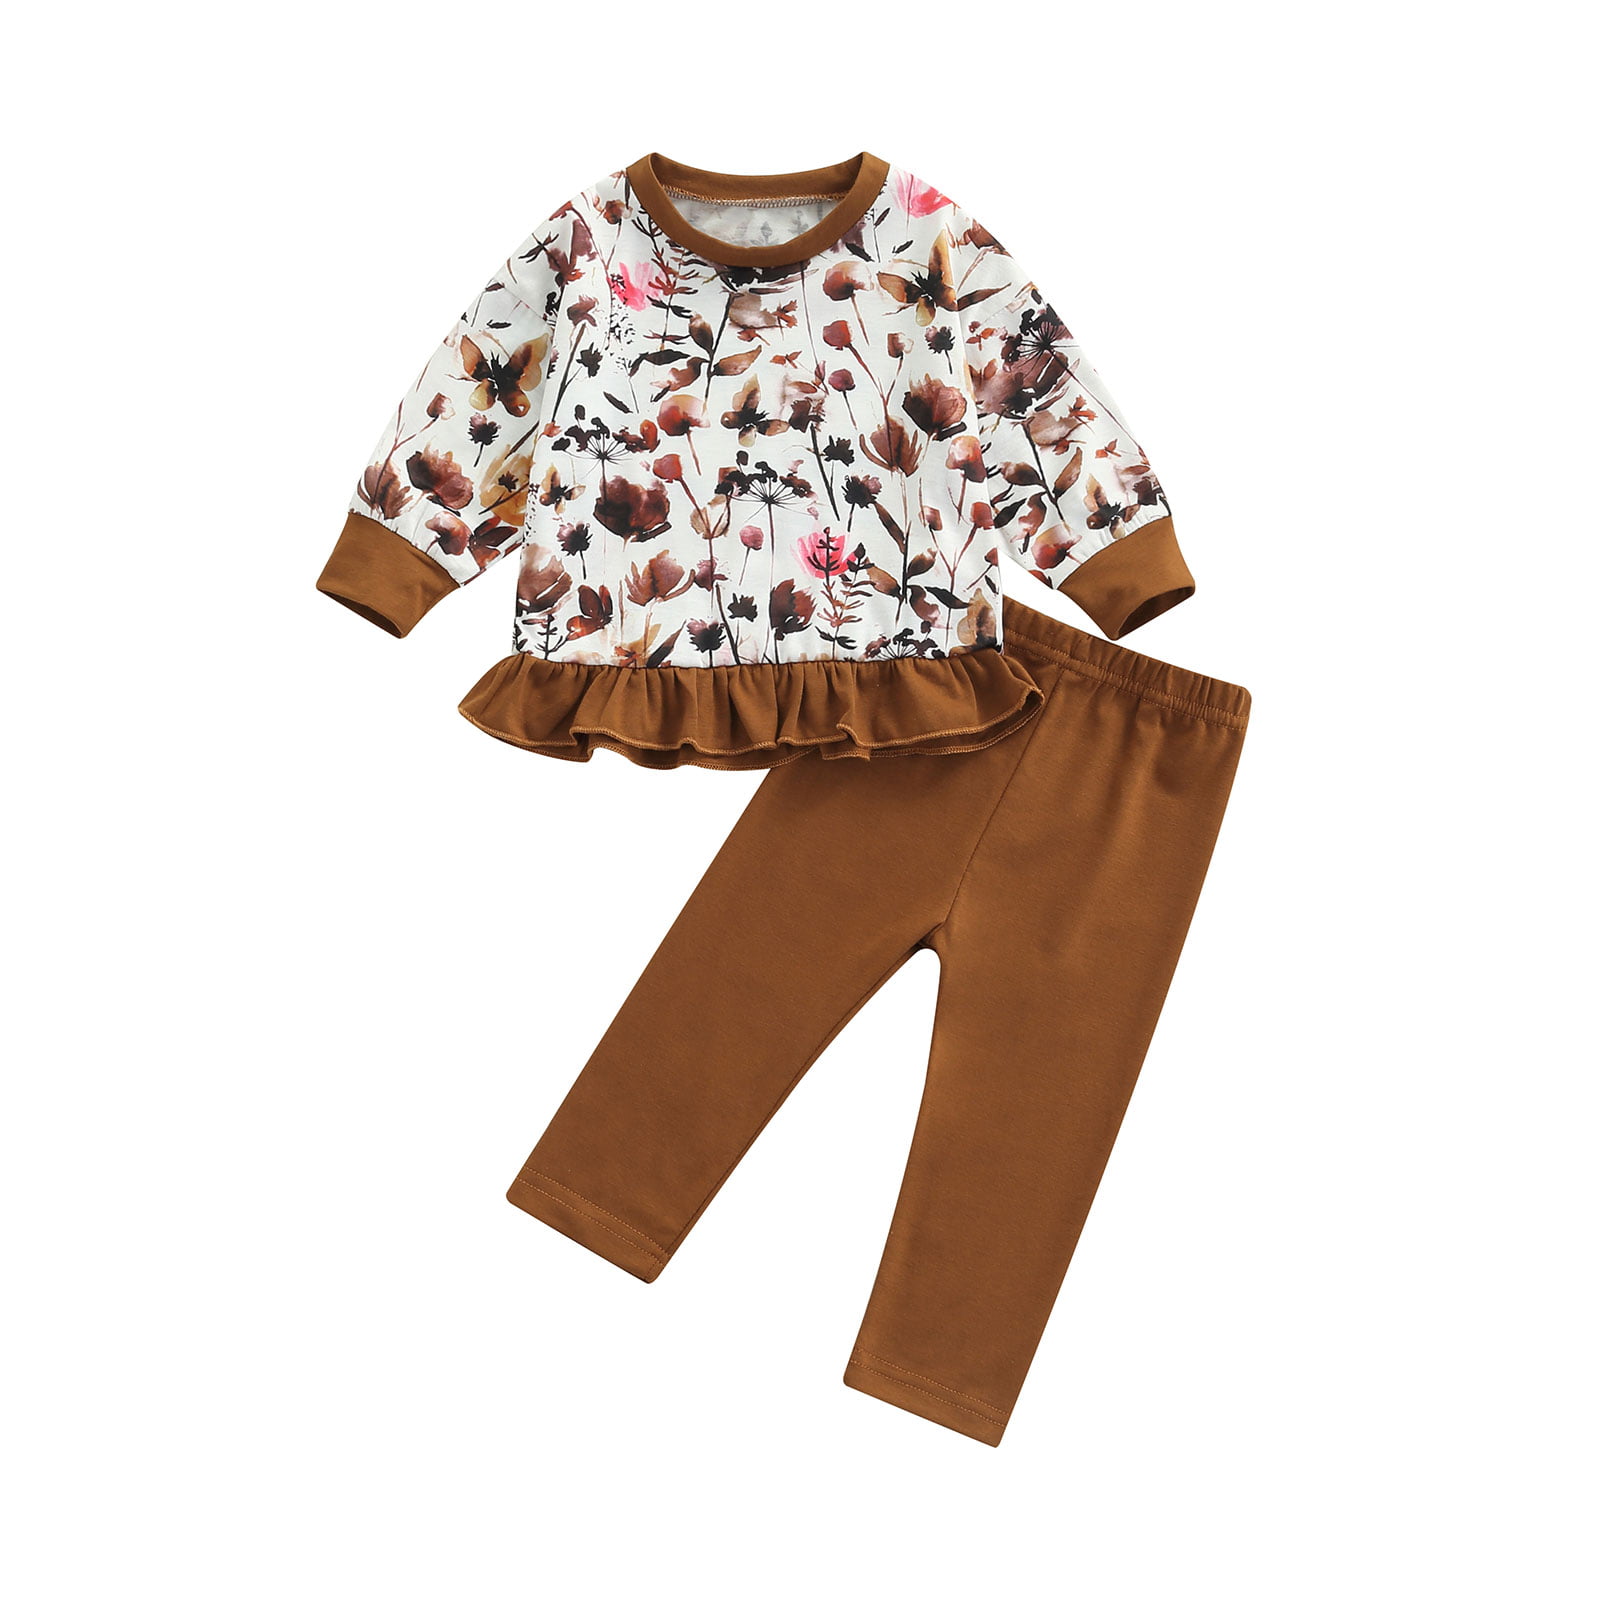 Black+White, 12-18 Months Lefyira Baby Girl Stripe Top Blouse Autumn Ruffle Sleeve Shirt Casual Clothes